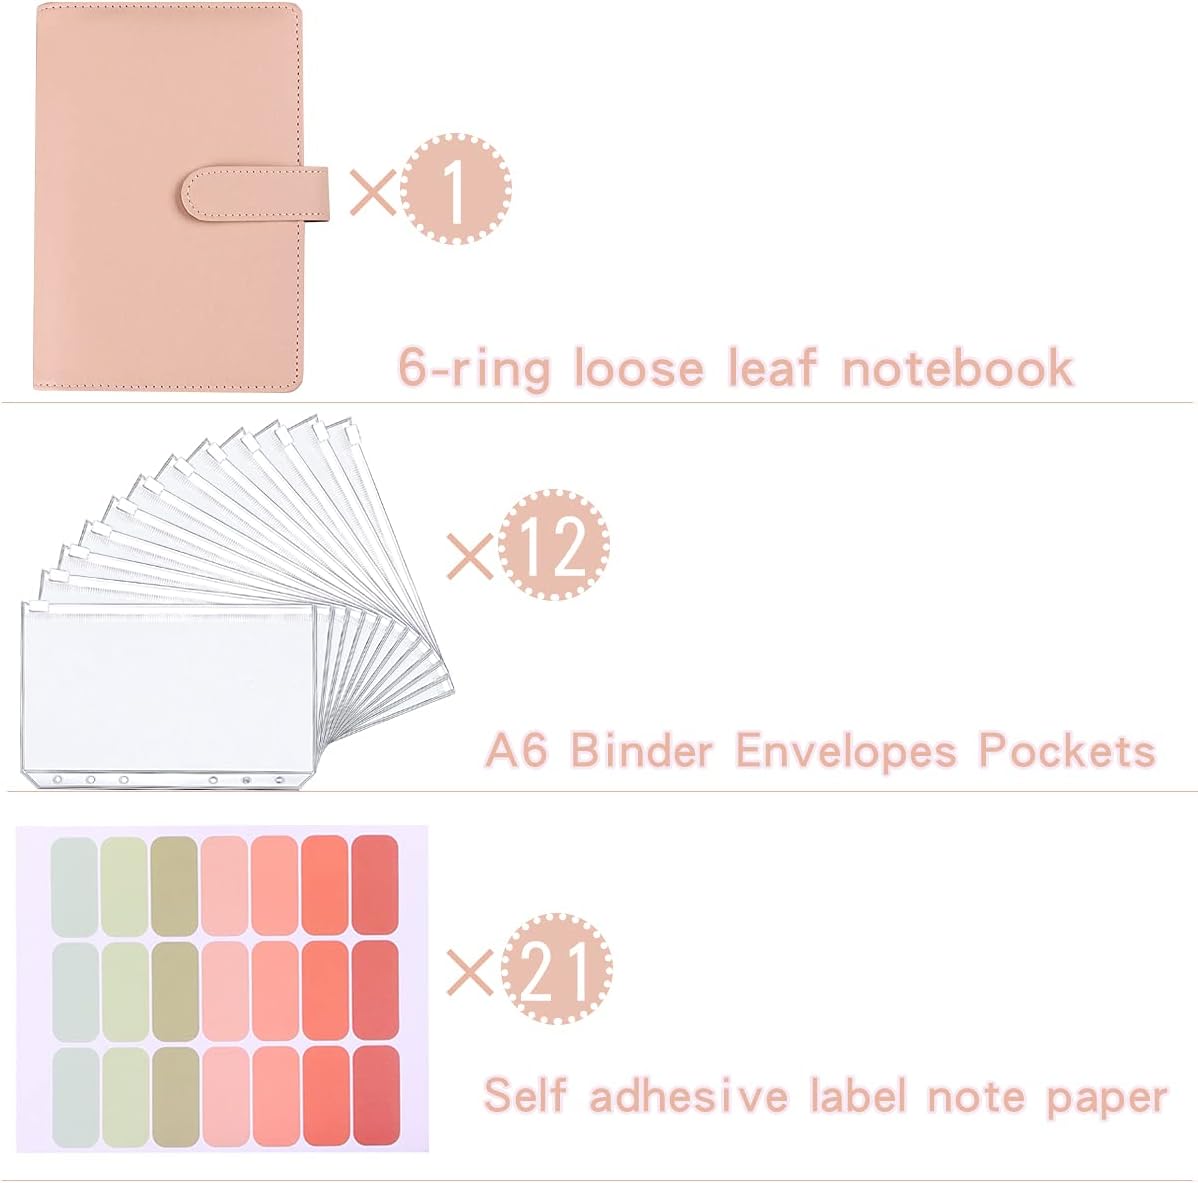 A5 Binder Notebook Financial Management with 12PCS Budget Envelopes